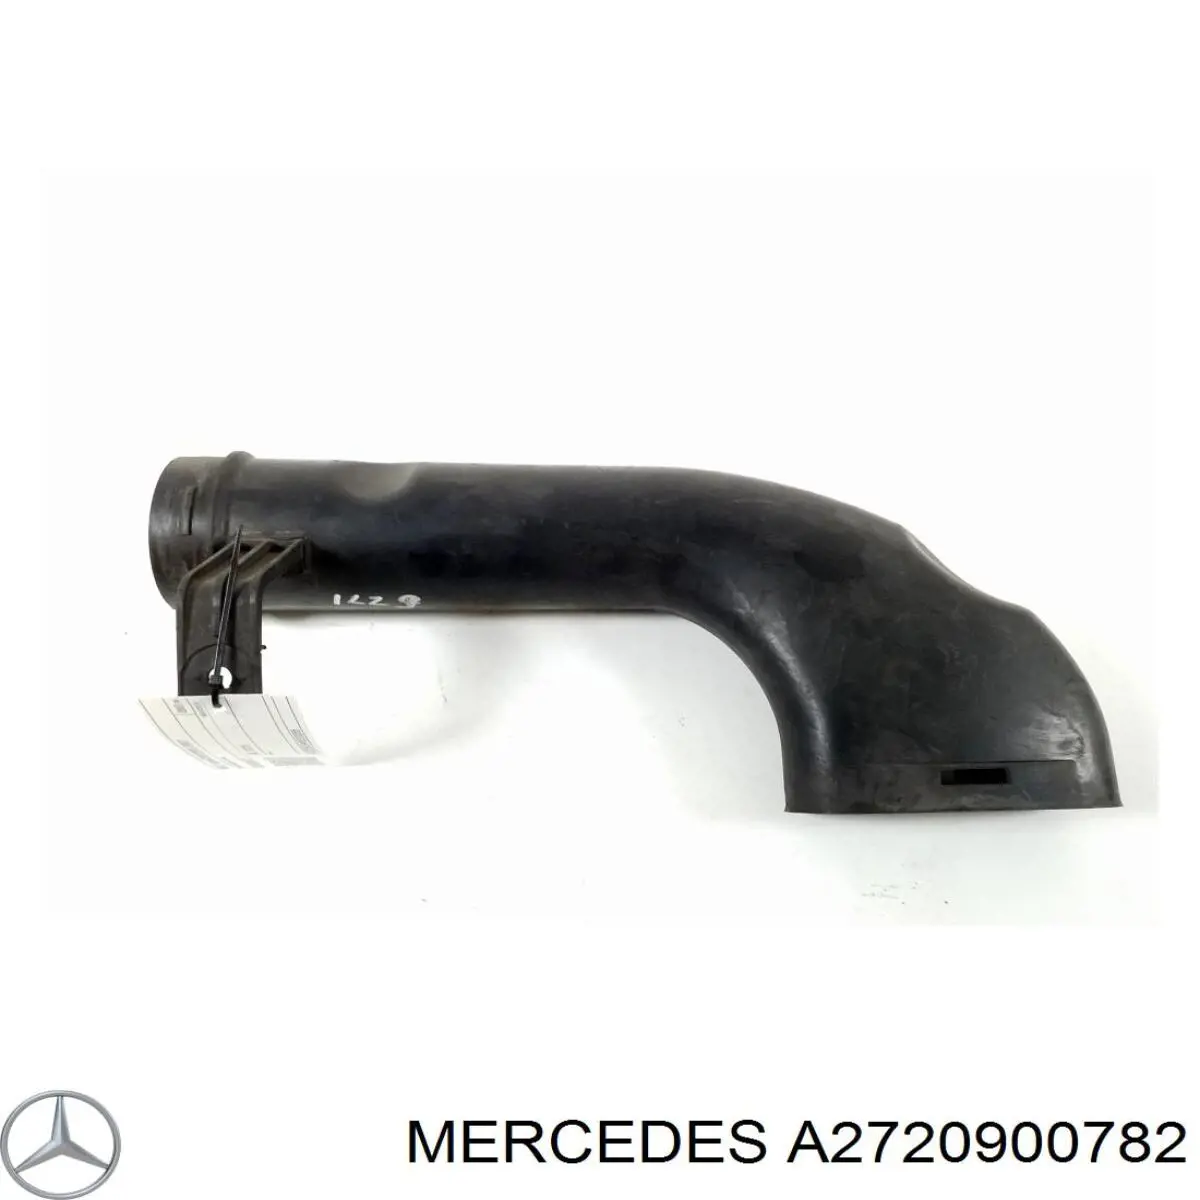 2720900782 Mercedes tubo flexible de aspiración, entrada del filtro de aire